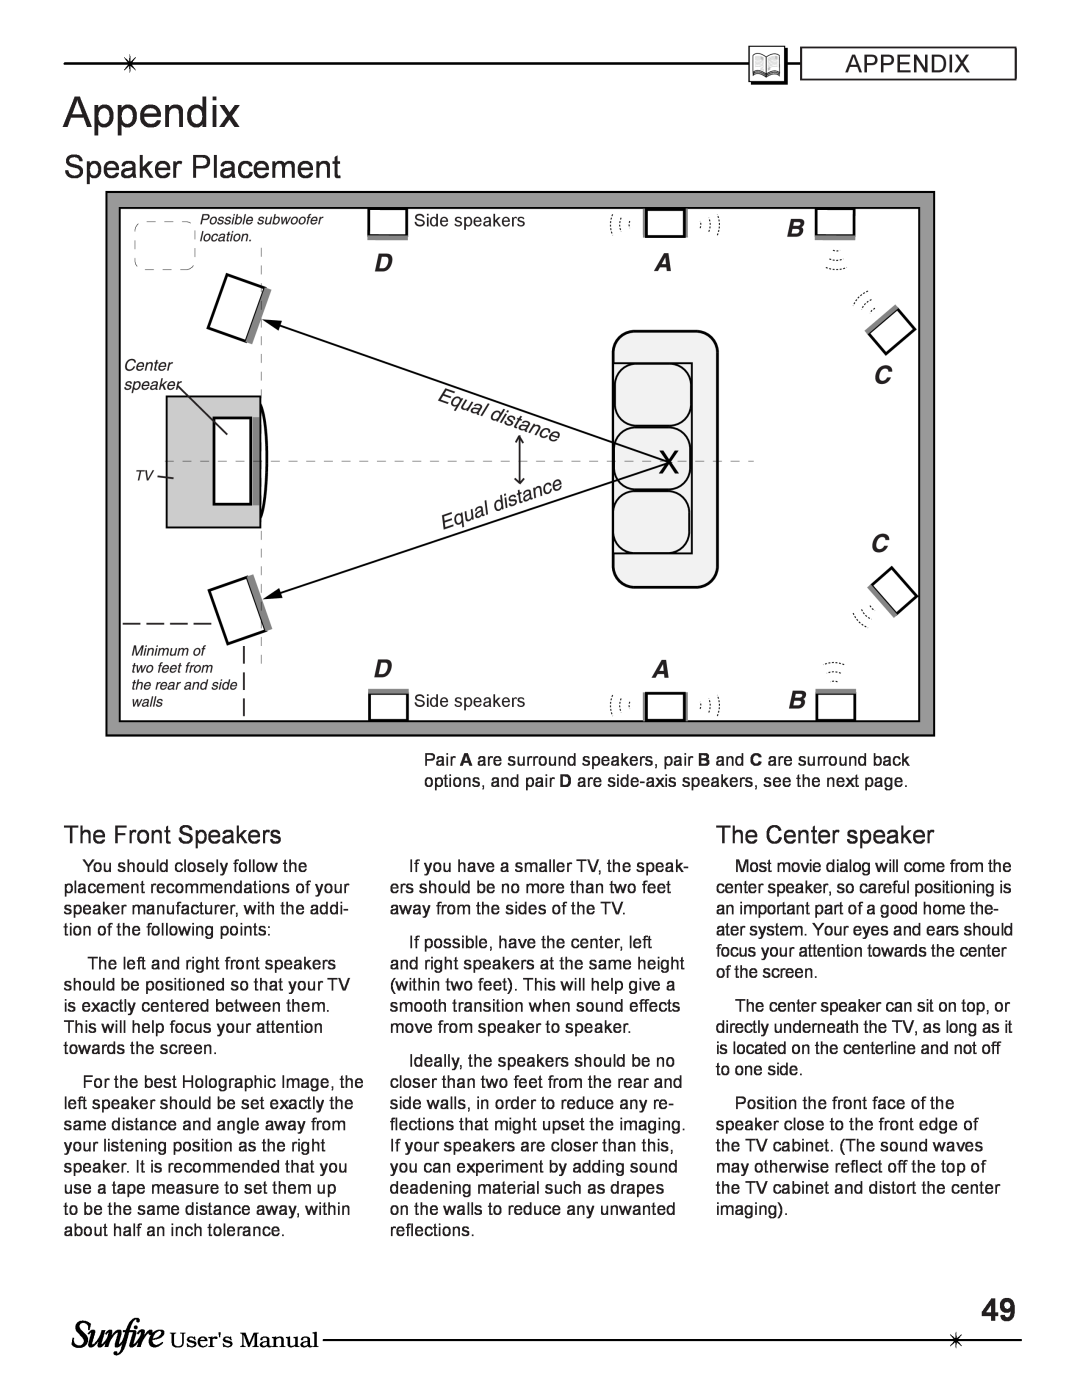 Sunfire TGP-5(E) manual Appendix, Speaker Placement, Users Manual 